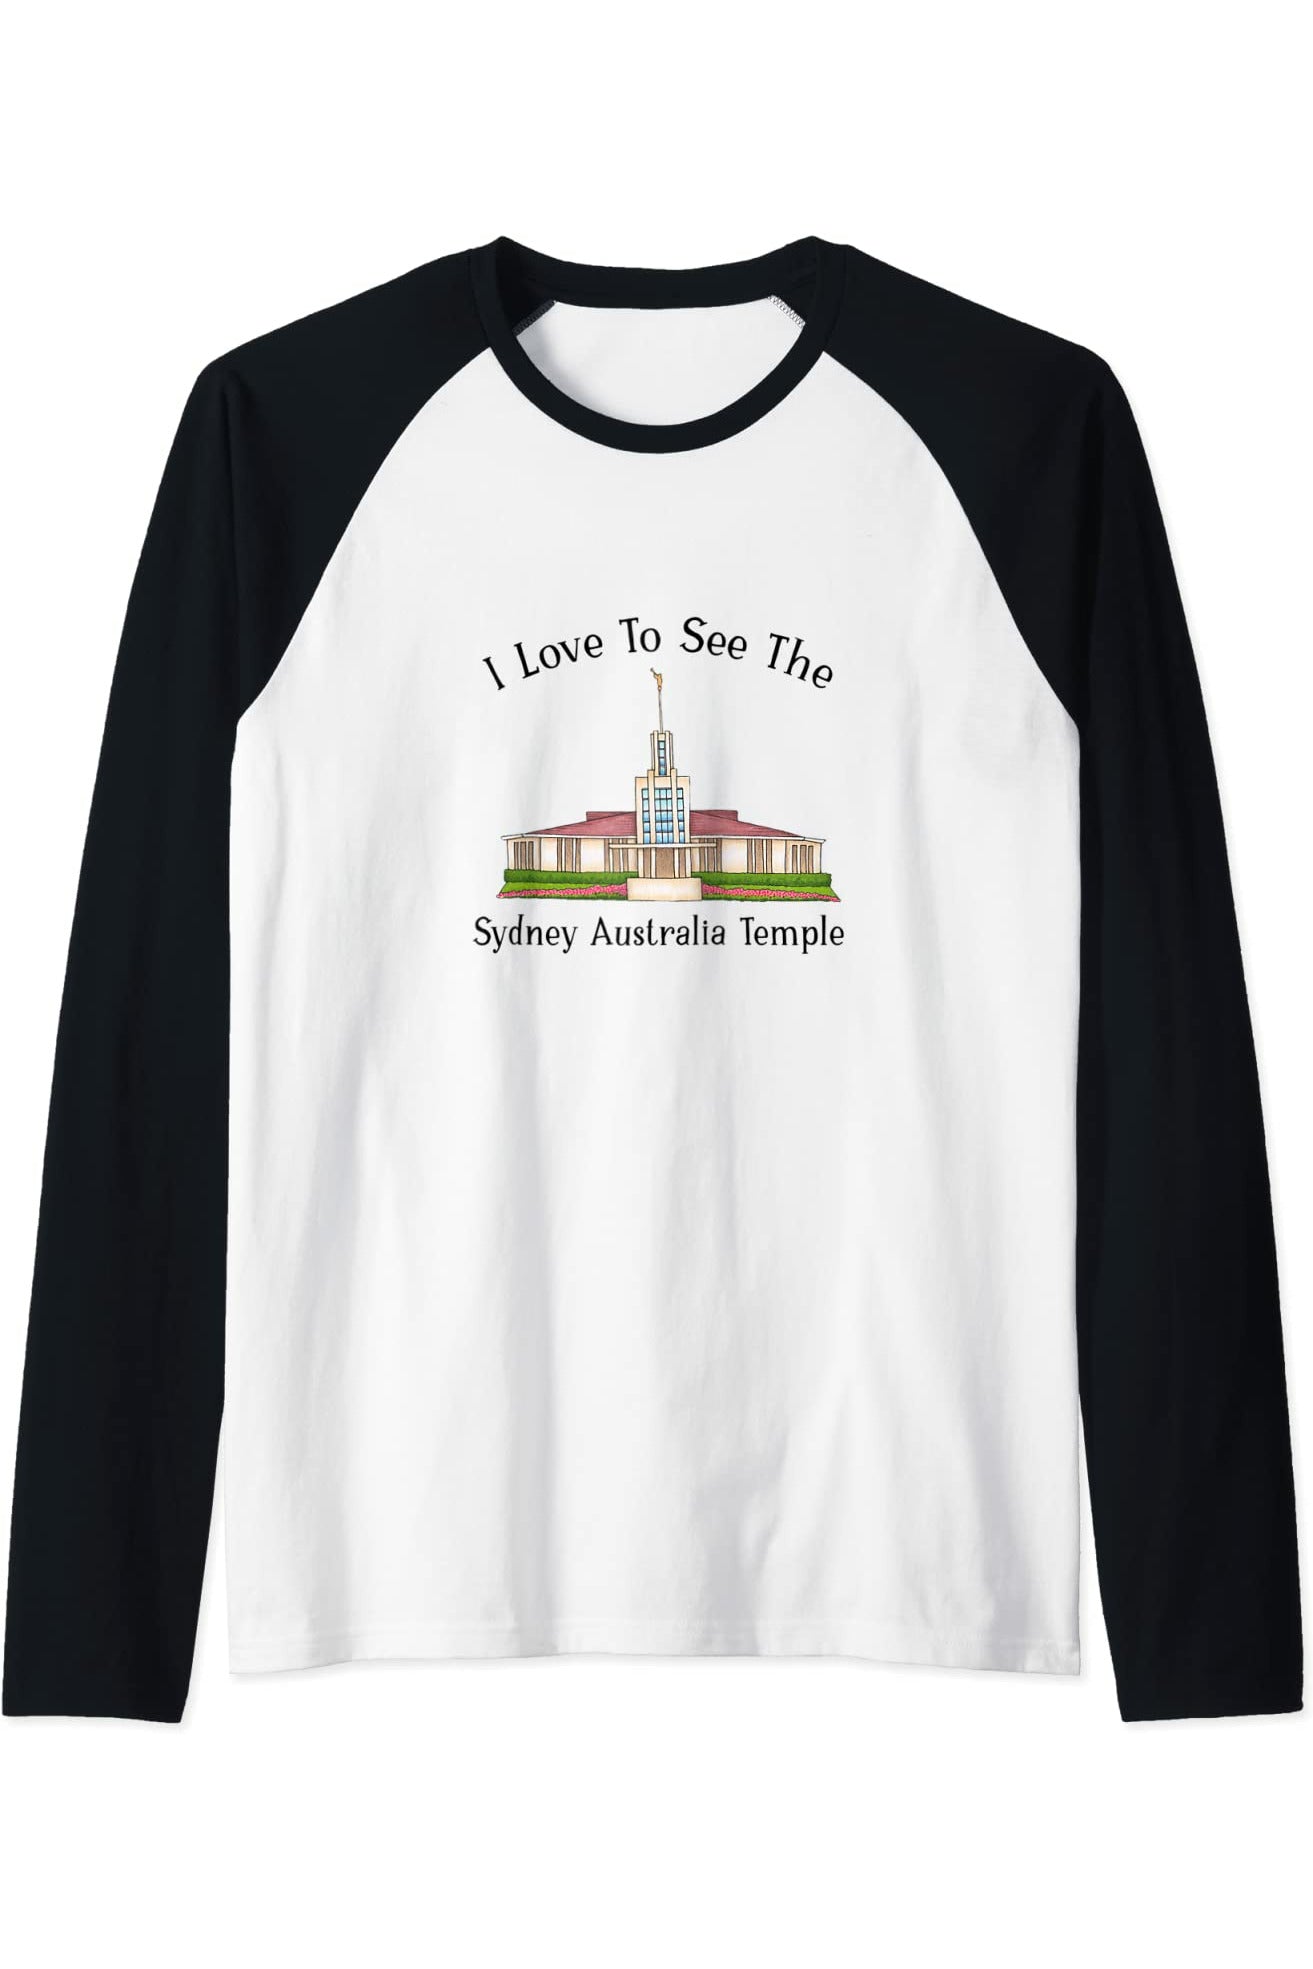 Sydney Australia Temple Raglan - Happy Style (English) US